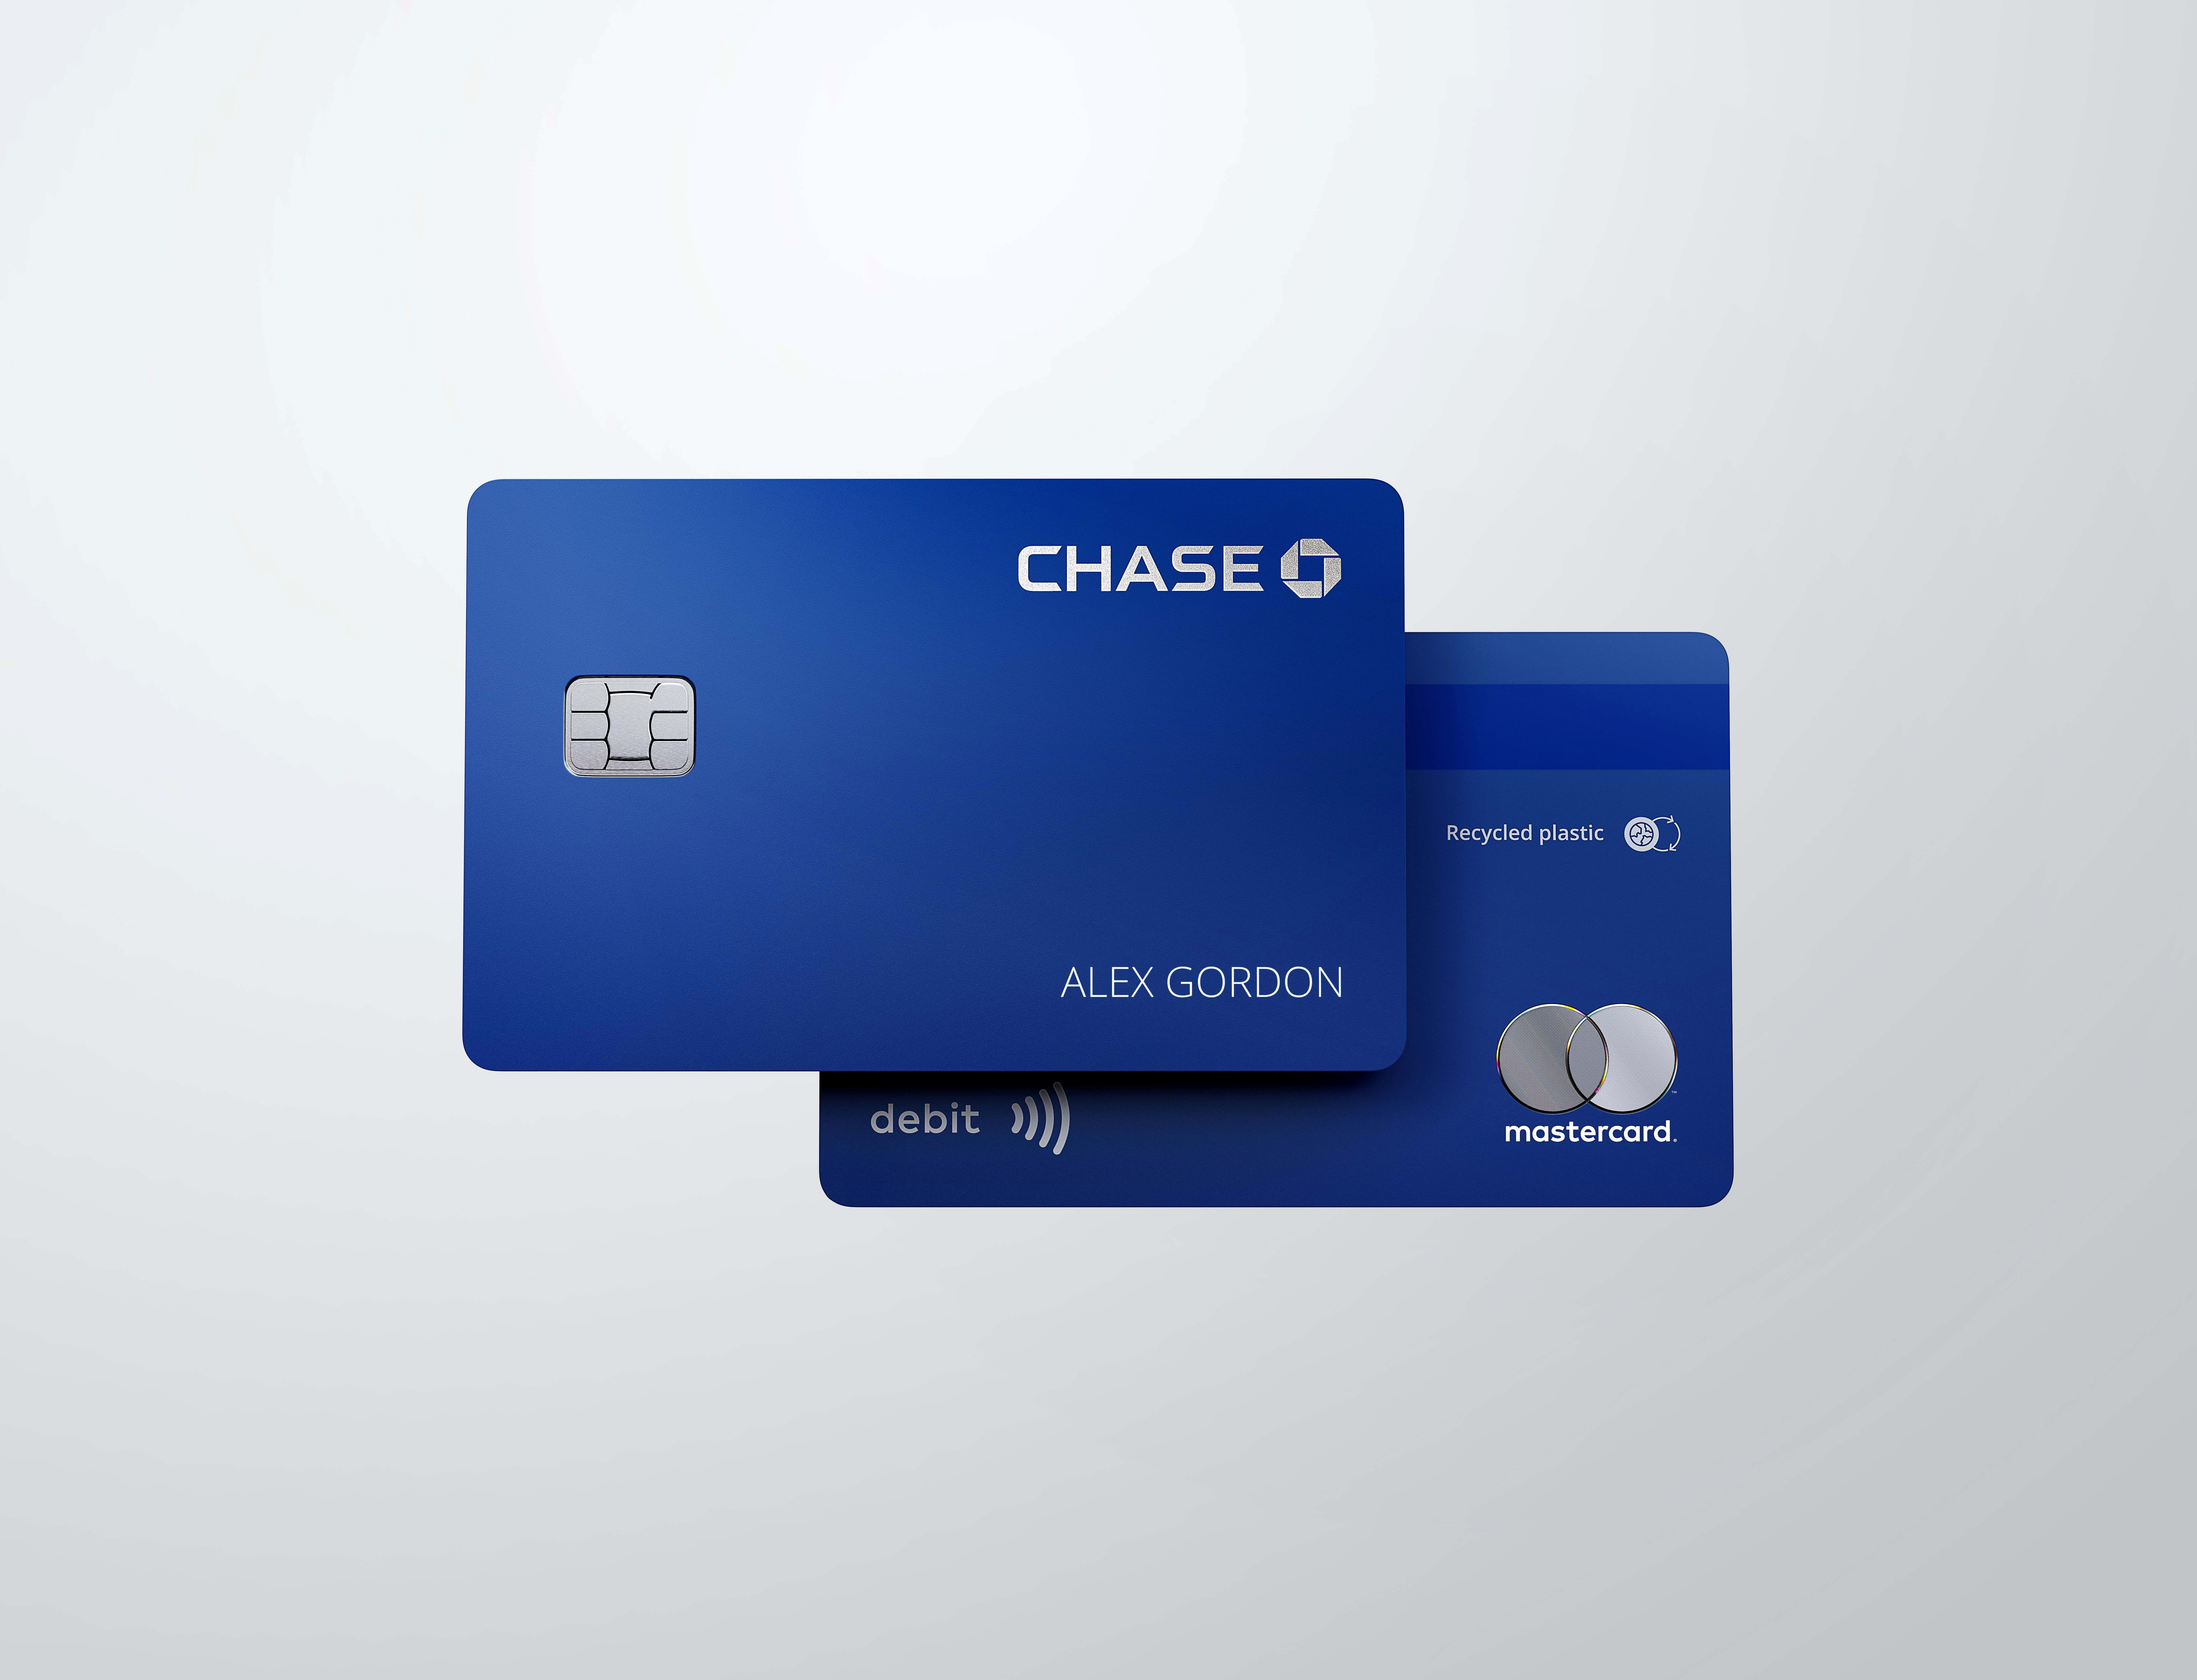 Chase's debit card